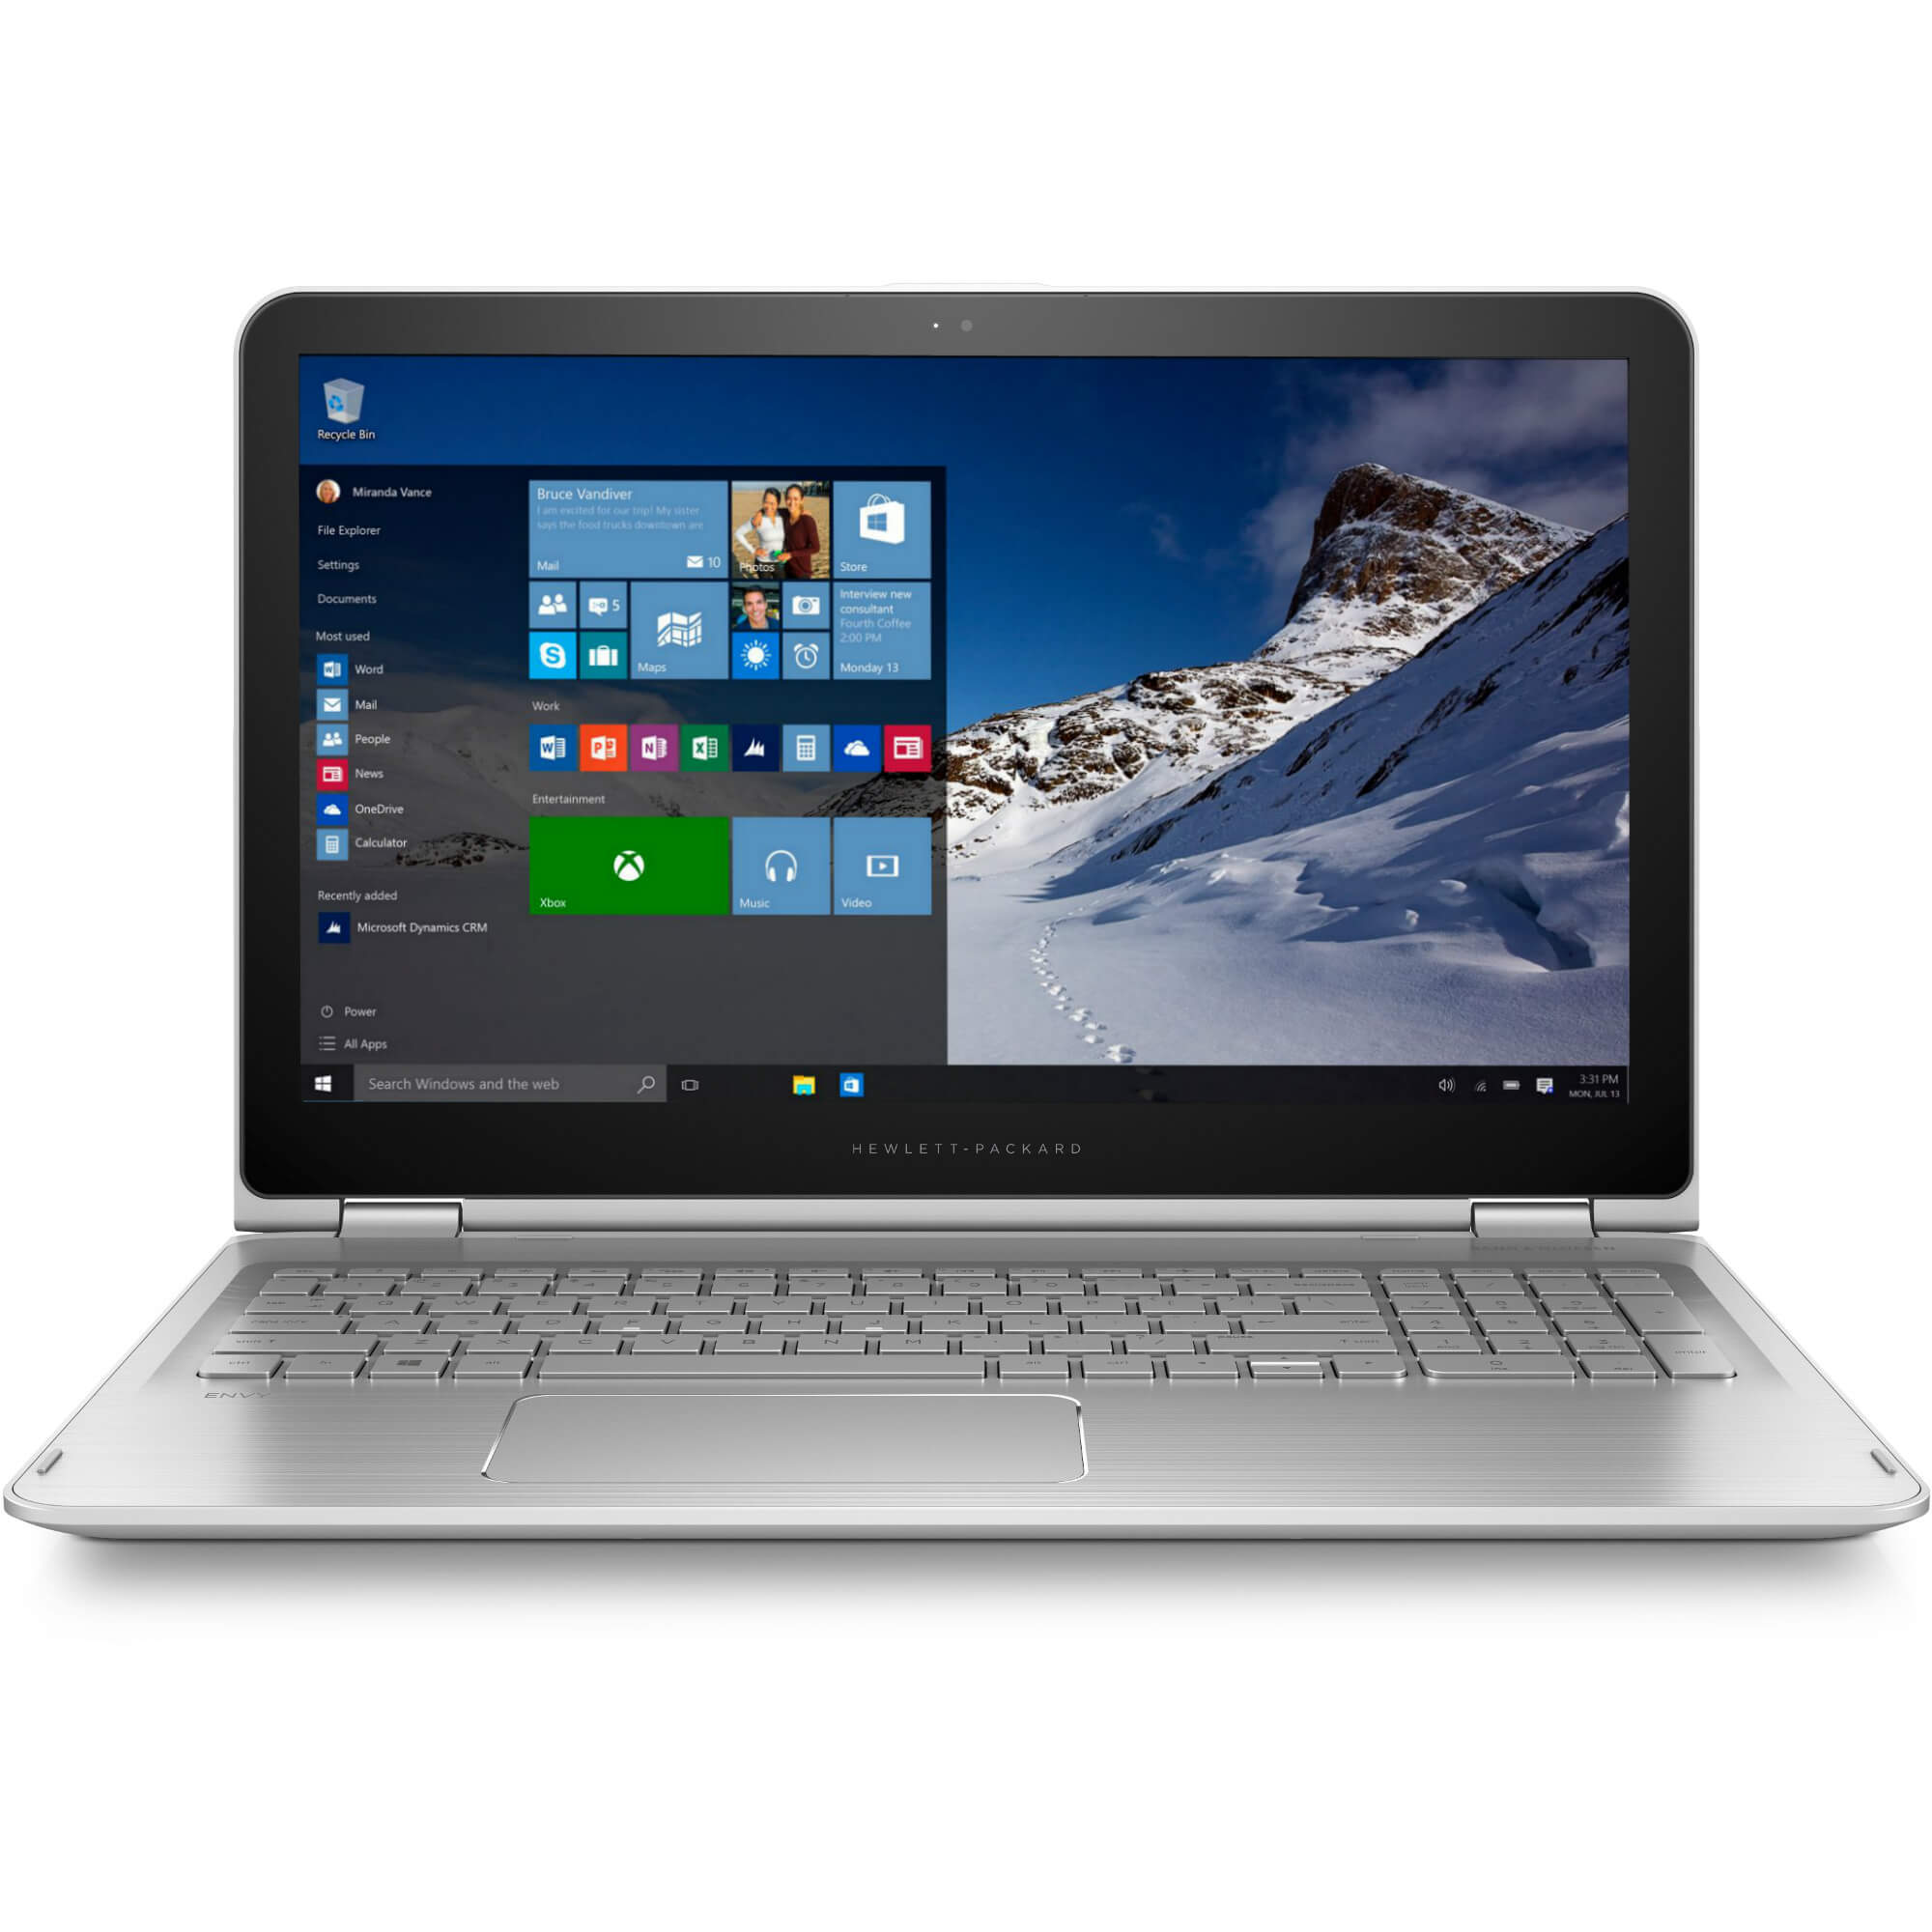  Laptop 2 in 1 HP Envy x360, Intel Core i7-6500U, 4GB DDR3, HDD 500GB, nVidia GeForce GT 930M 2GB, Windows 10 Home 